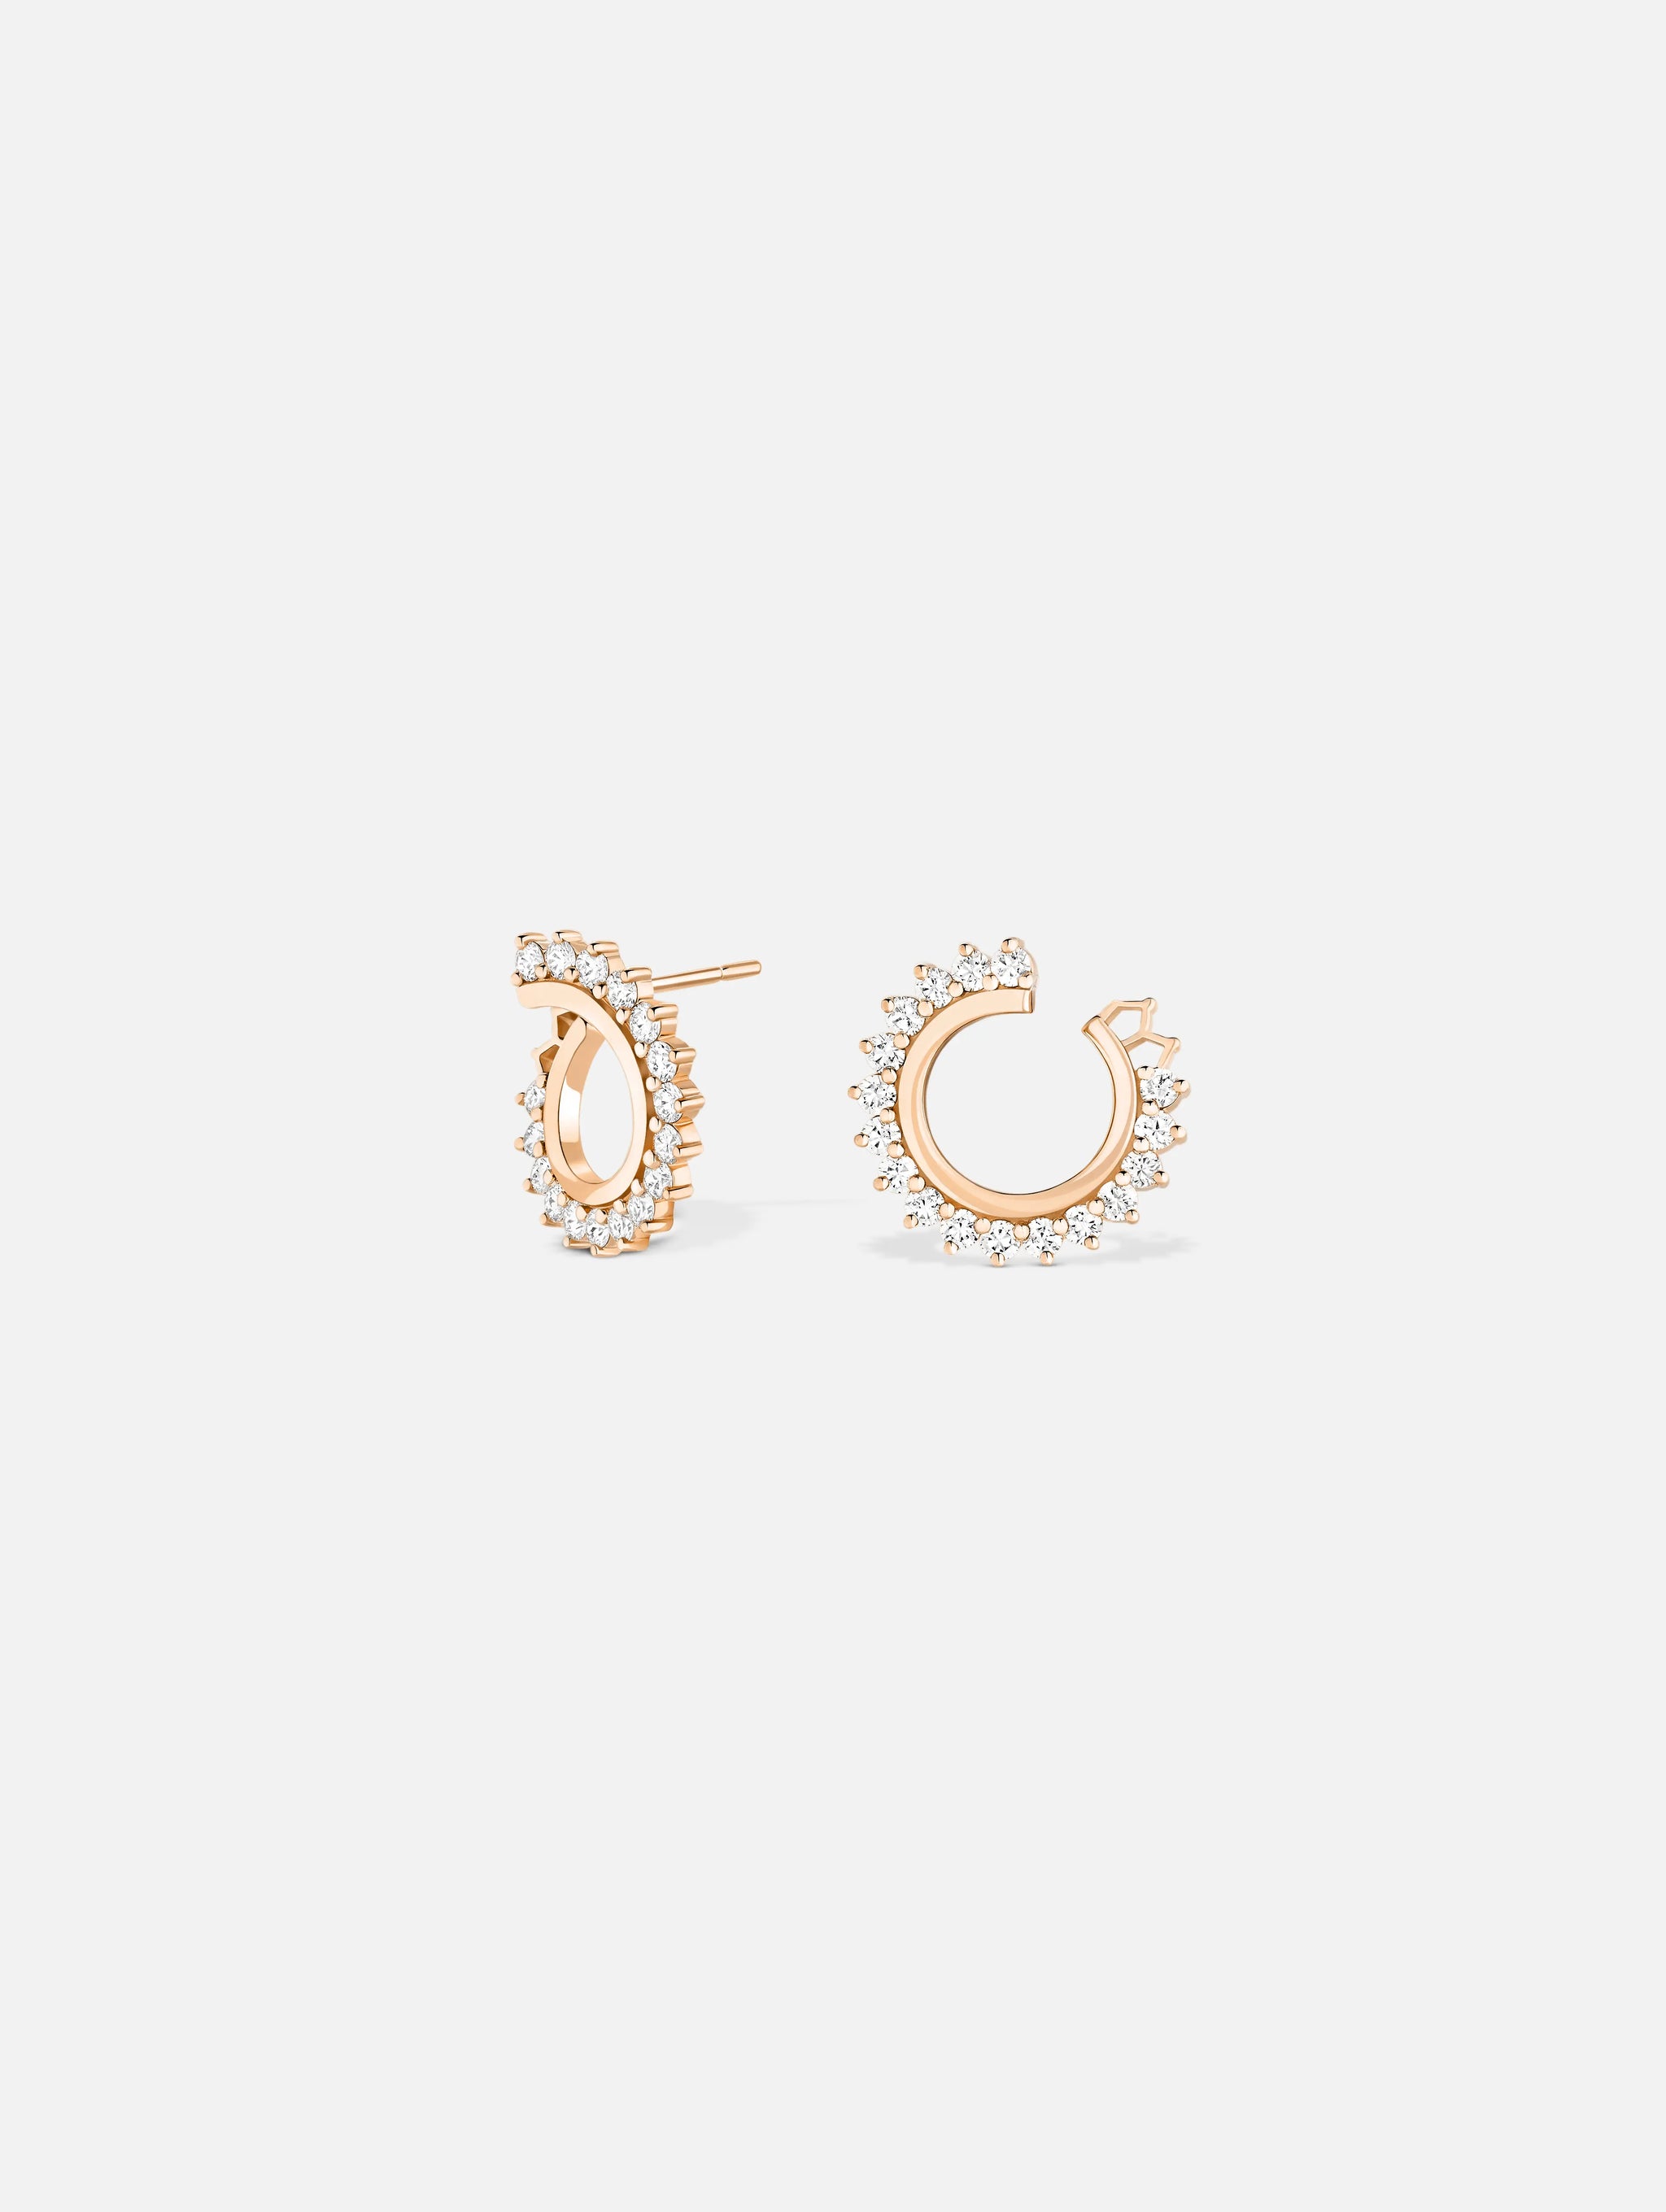 Diamond Earrings in Rose Gold - 1 - Nouvel Heritage